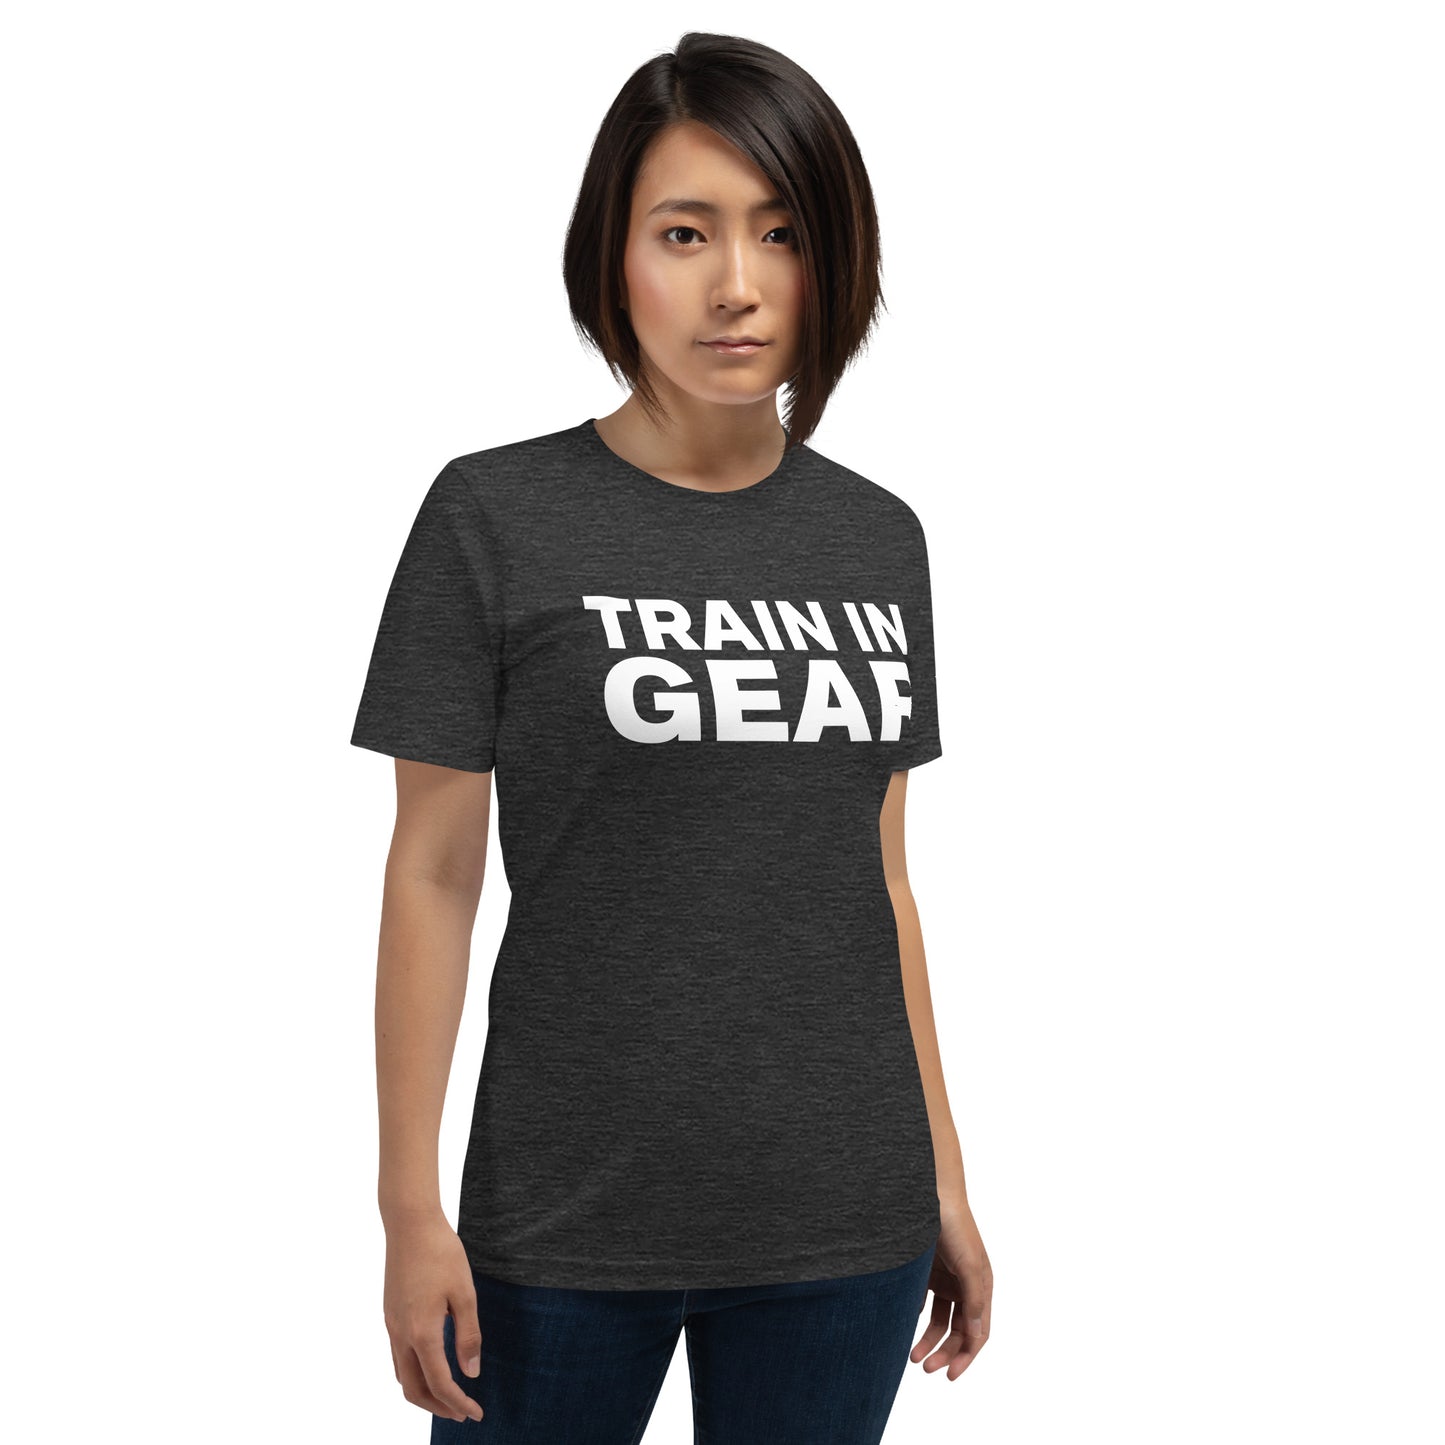 Train in Gear Firefighter shirt. Heather grey Women's  t-shirt.